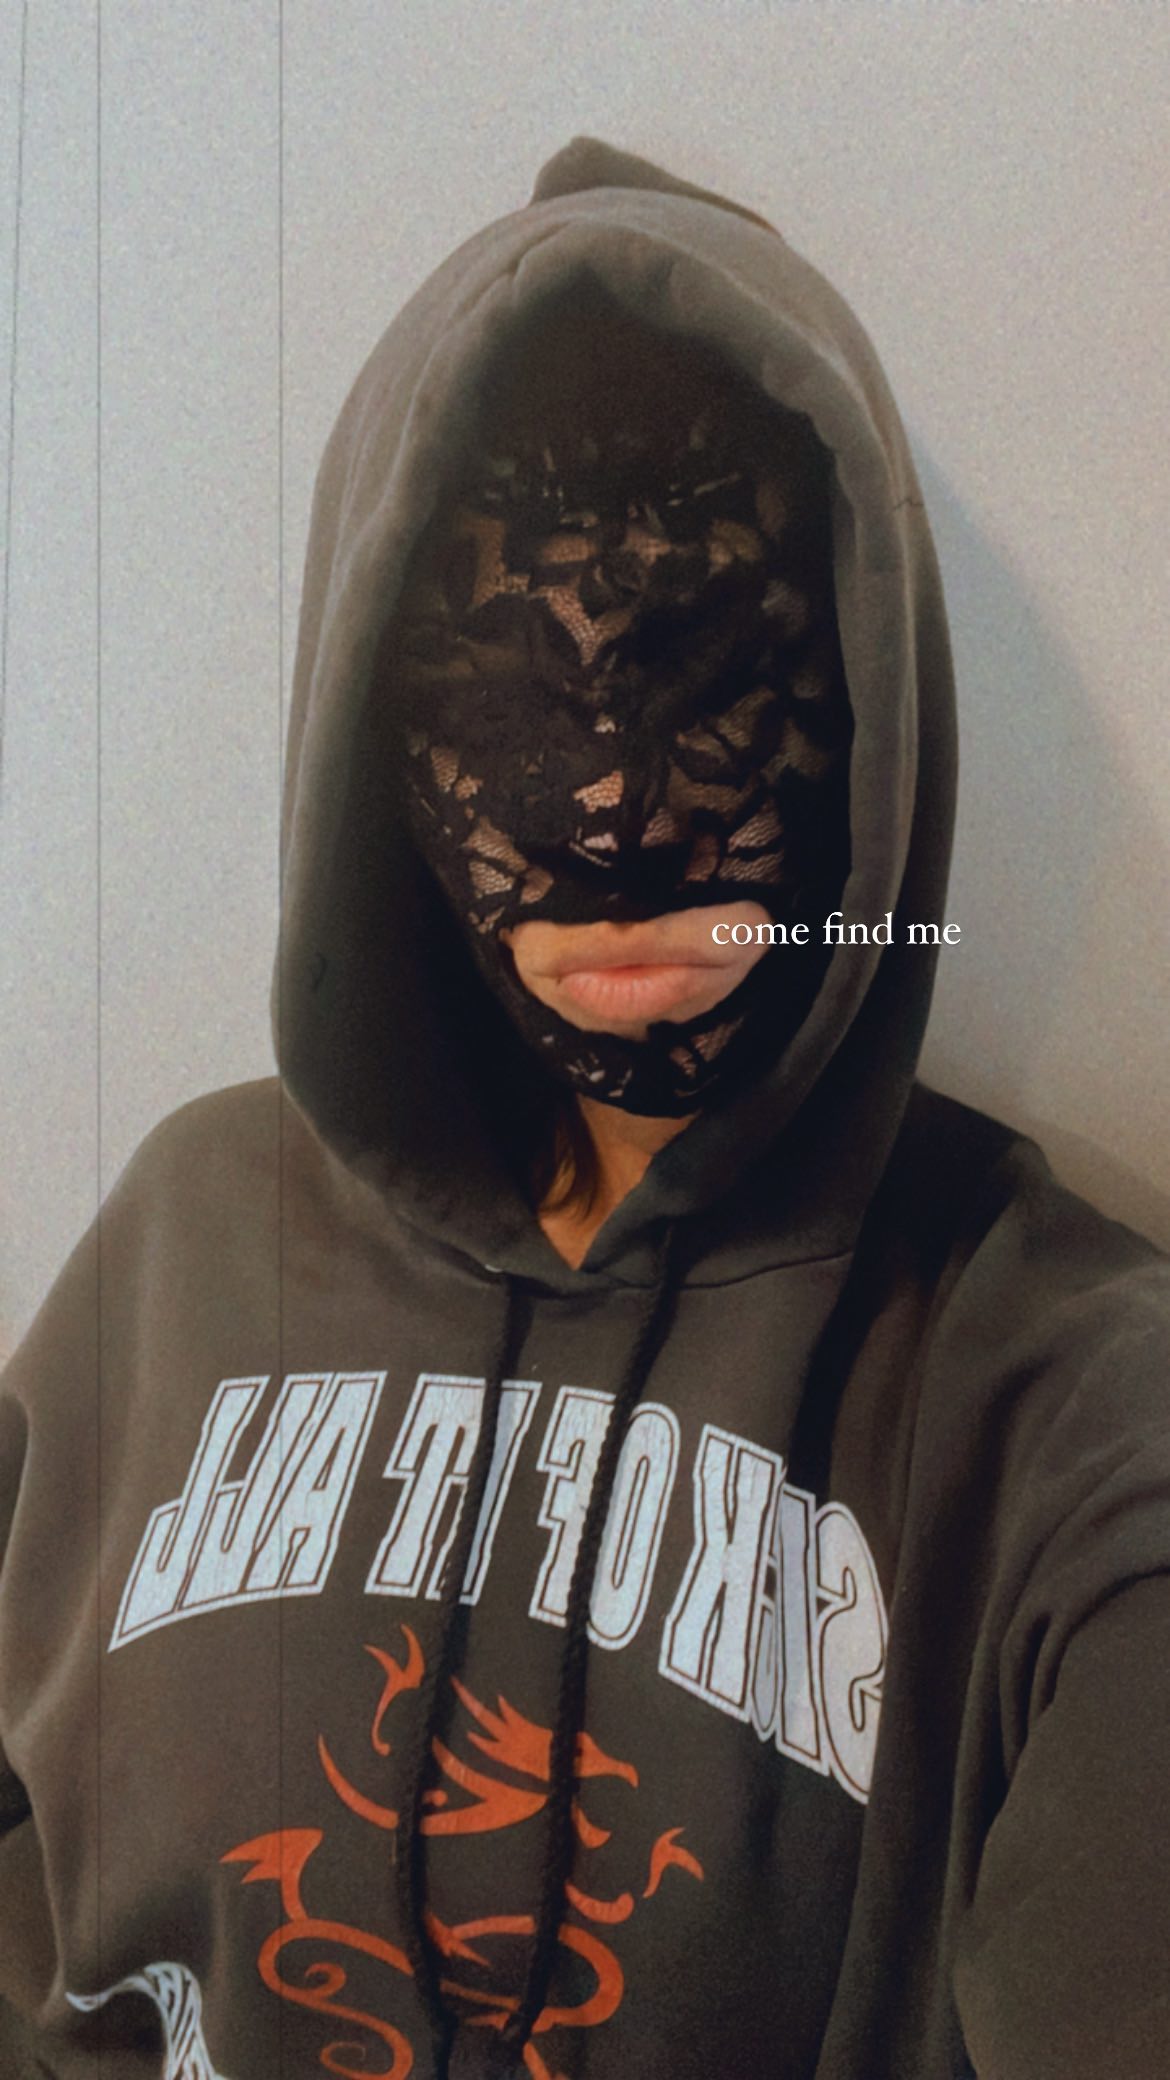 Kourtney Kardashian shares bizarre photo with mask on and urges ‘come find me’ after star slammed ‘creepy’ trolls